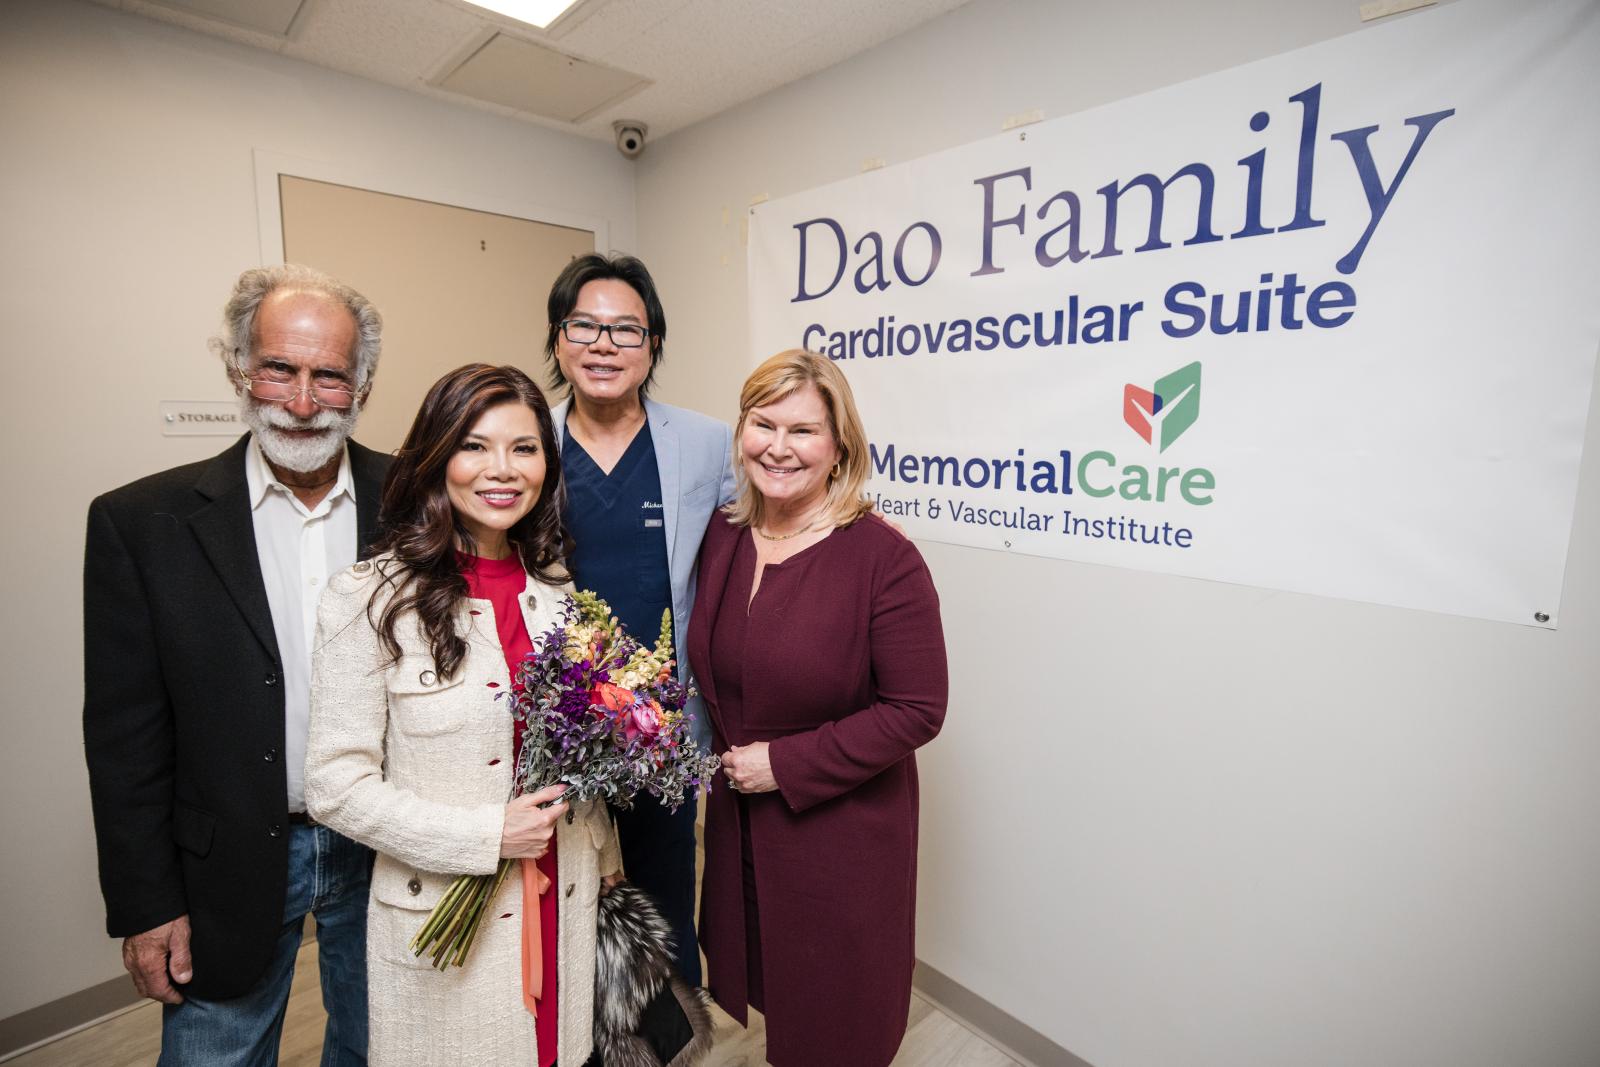 Dao Family Cardiovascular Suite